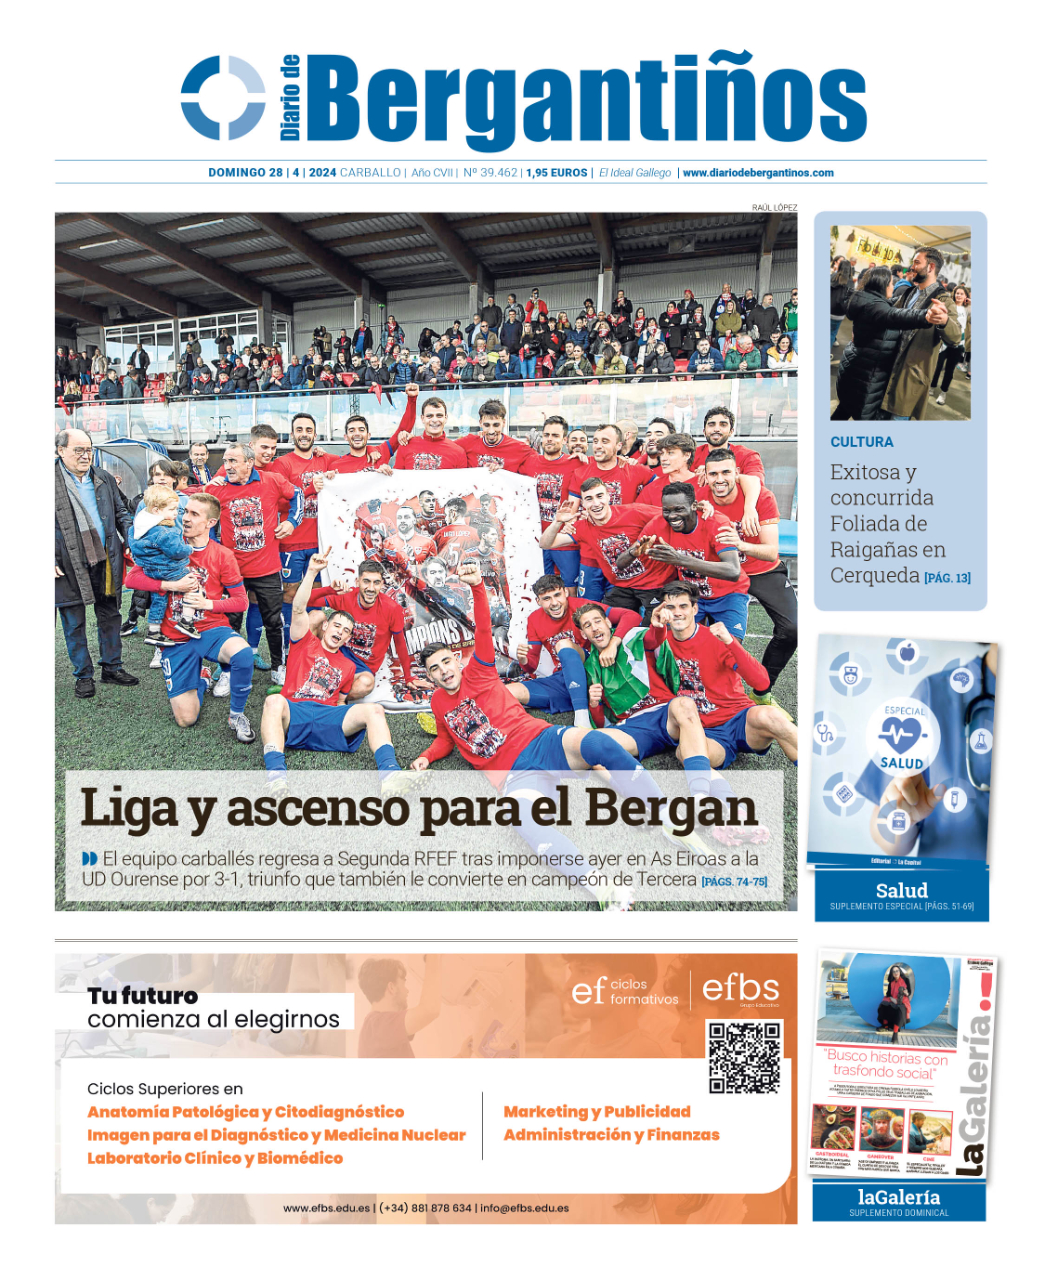 Bergantiños FC - Página 7 GMOkFJVXgAAD28C?format=jpg&name=large